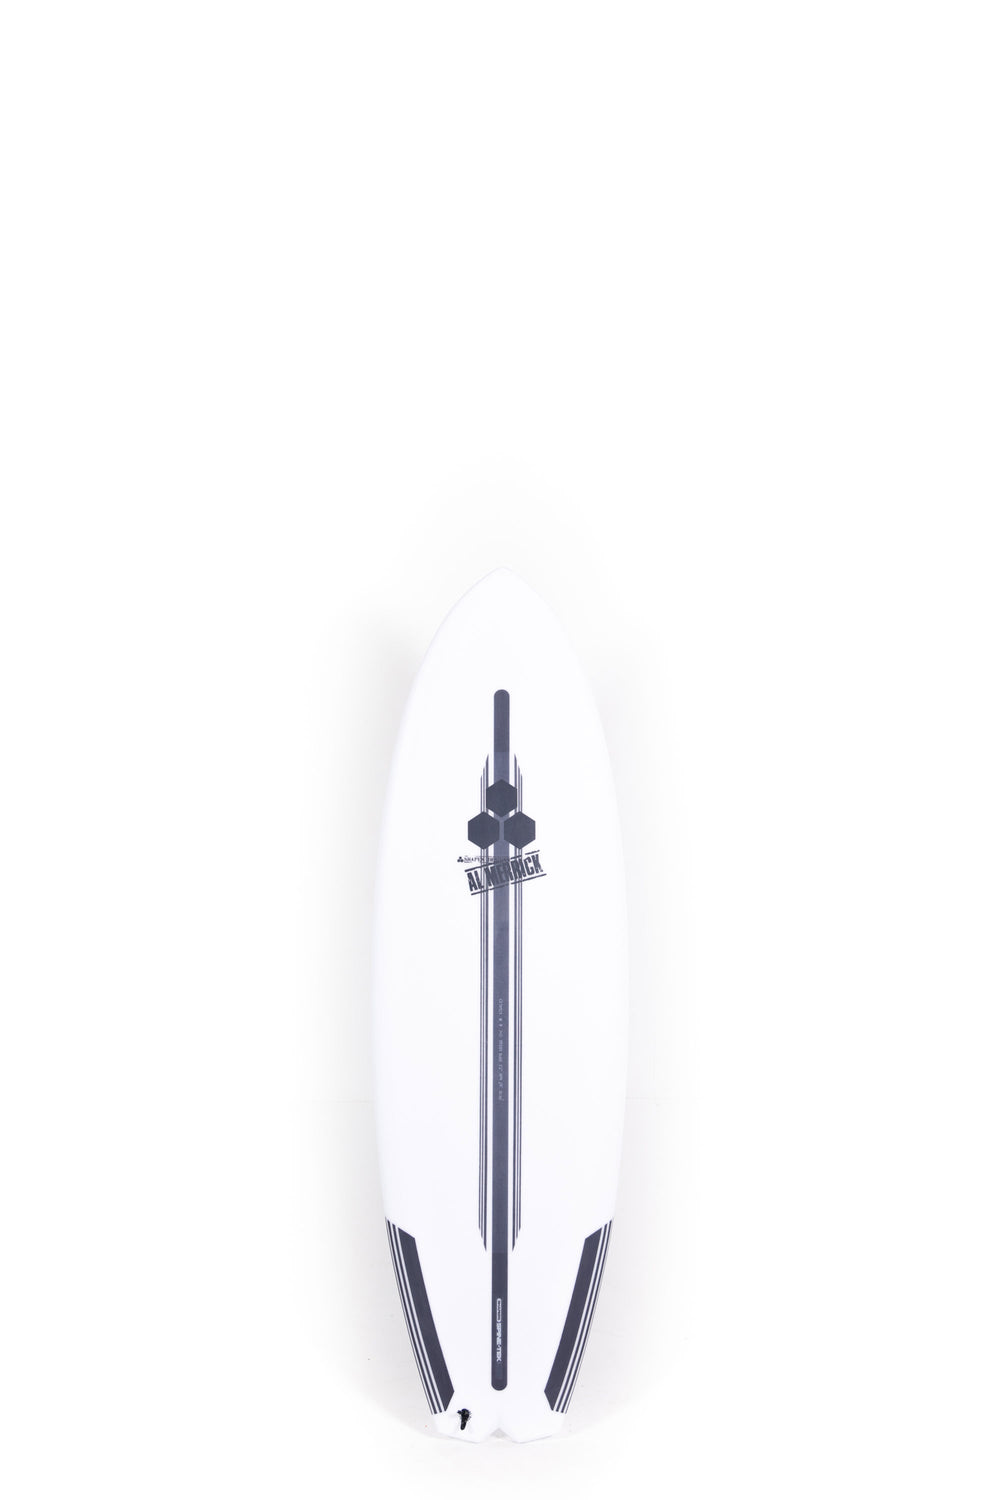 Pukas Surf Shop Channel Islands Surfboards Bobby Quad 5'6